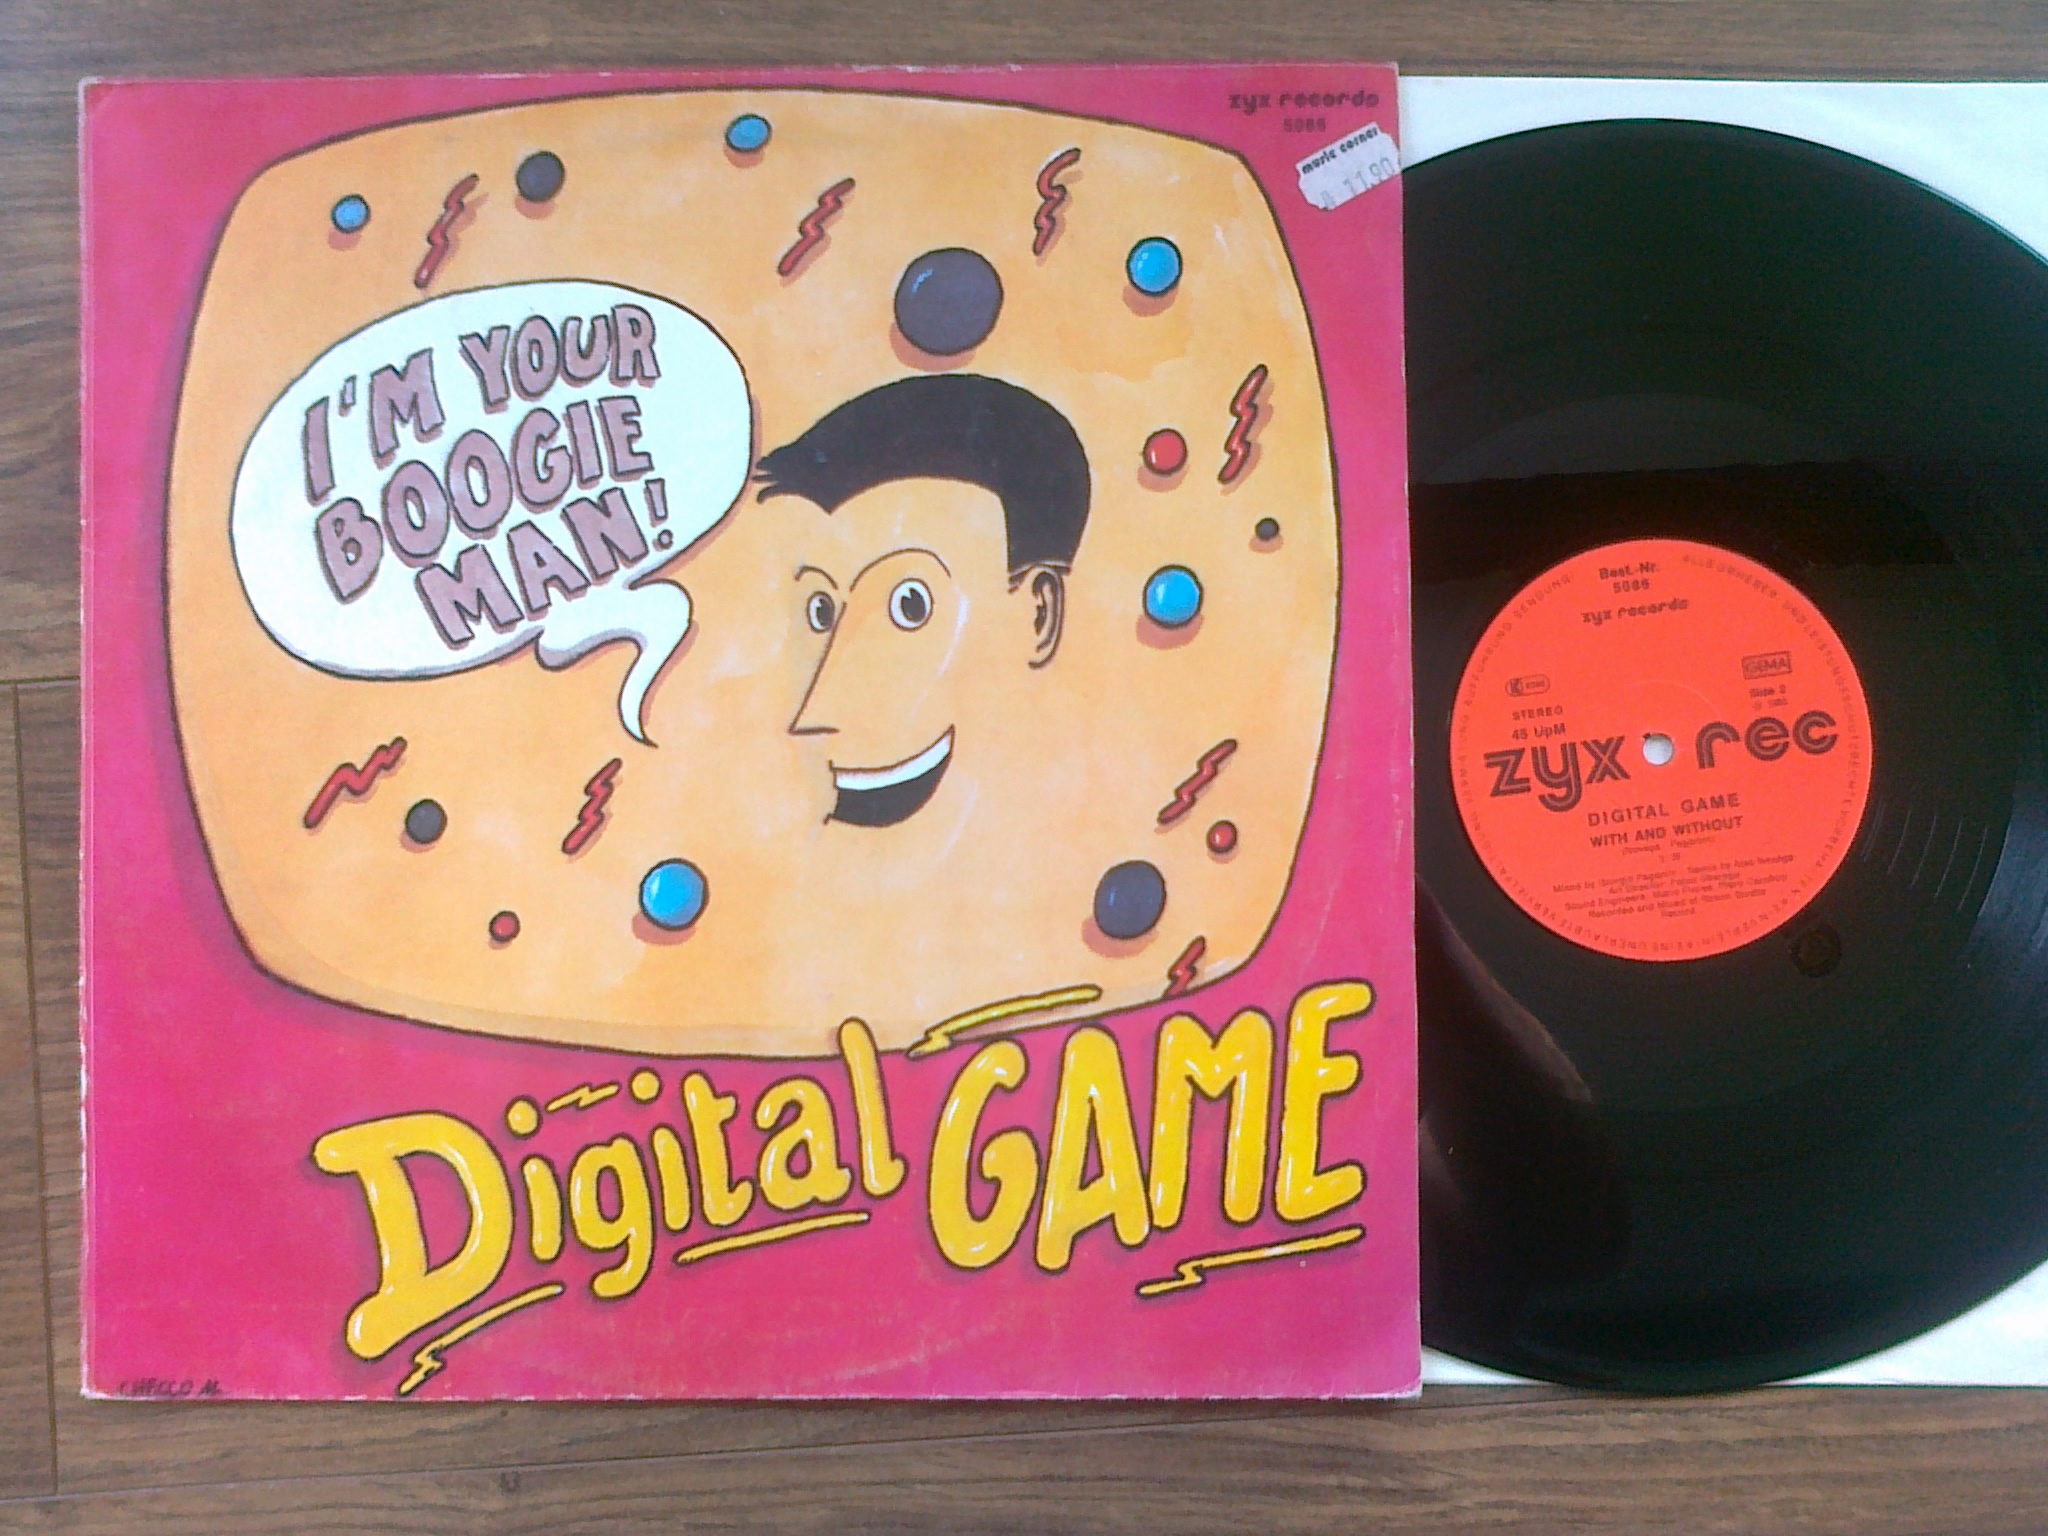 Digital Game - Im Your Boogie Man